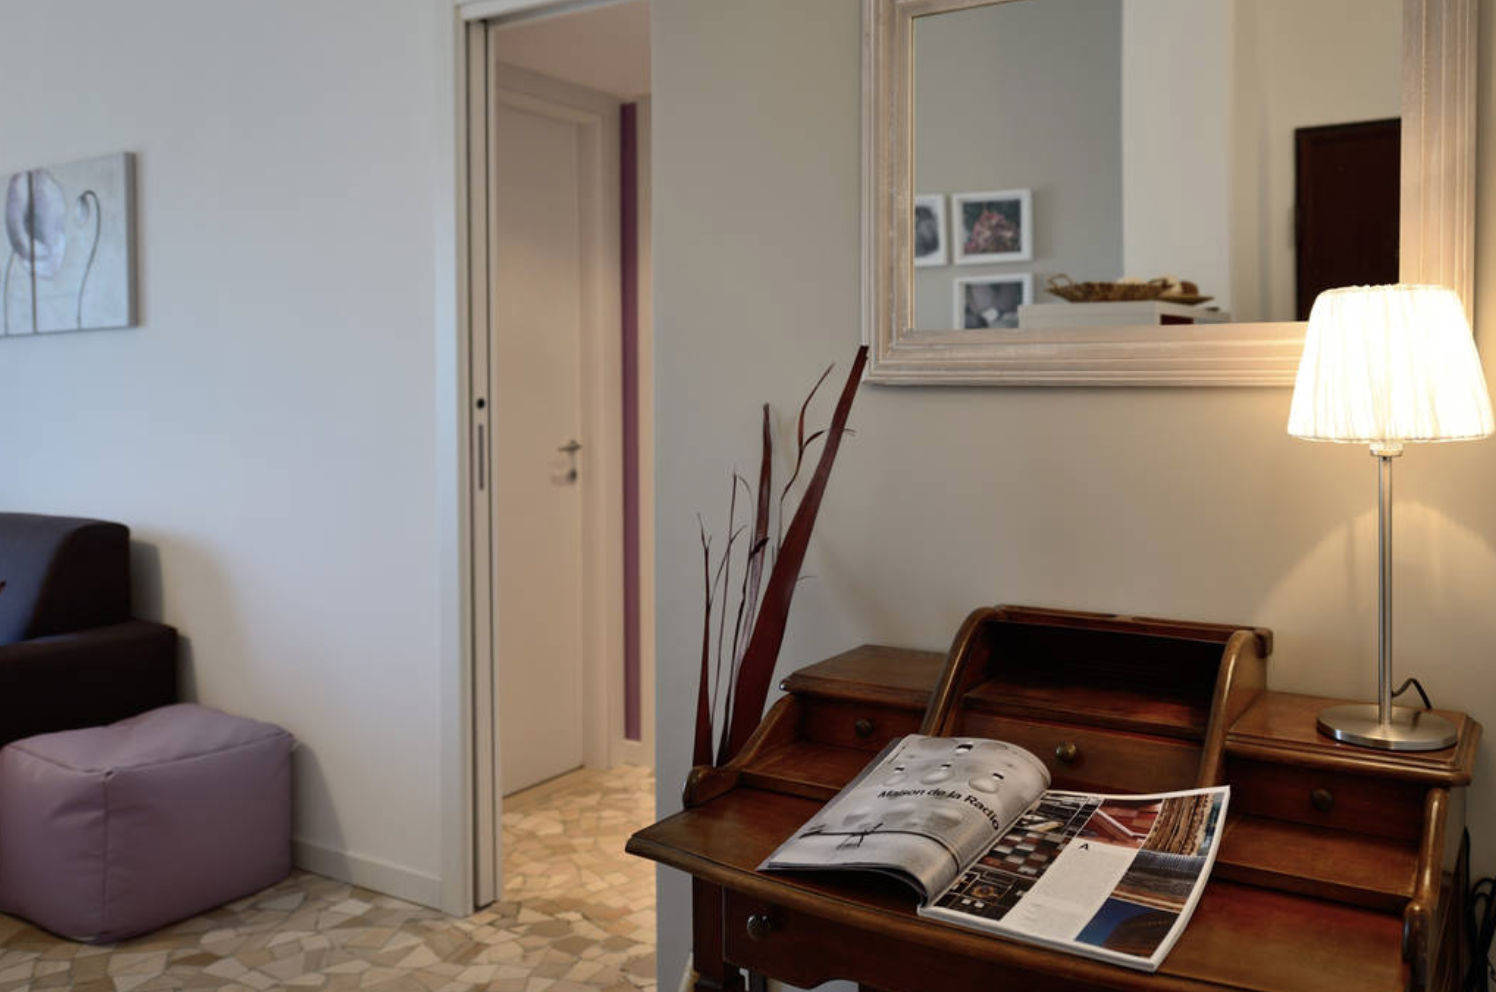 Chez Nous Milano - Appartamento in affitto - via Zurigo 24 - zona San Siro